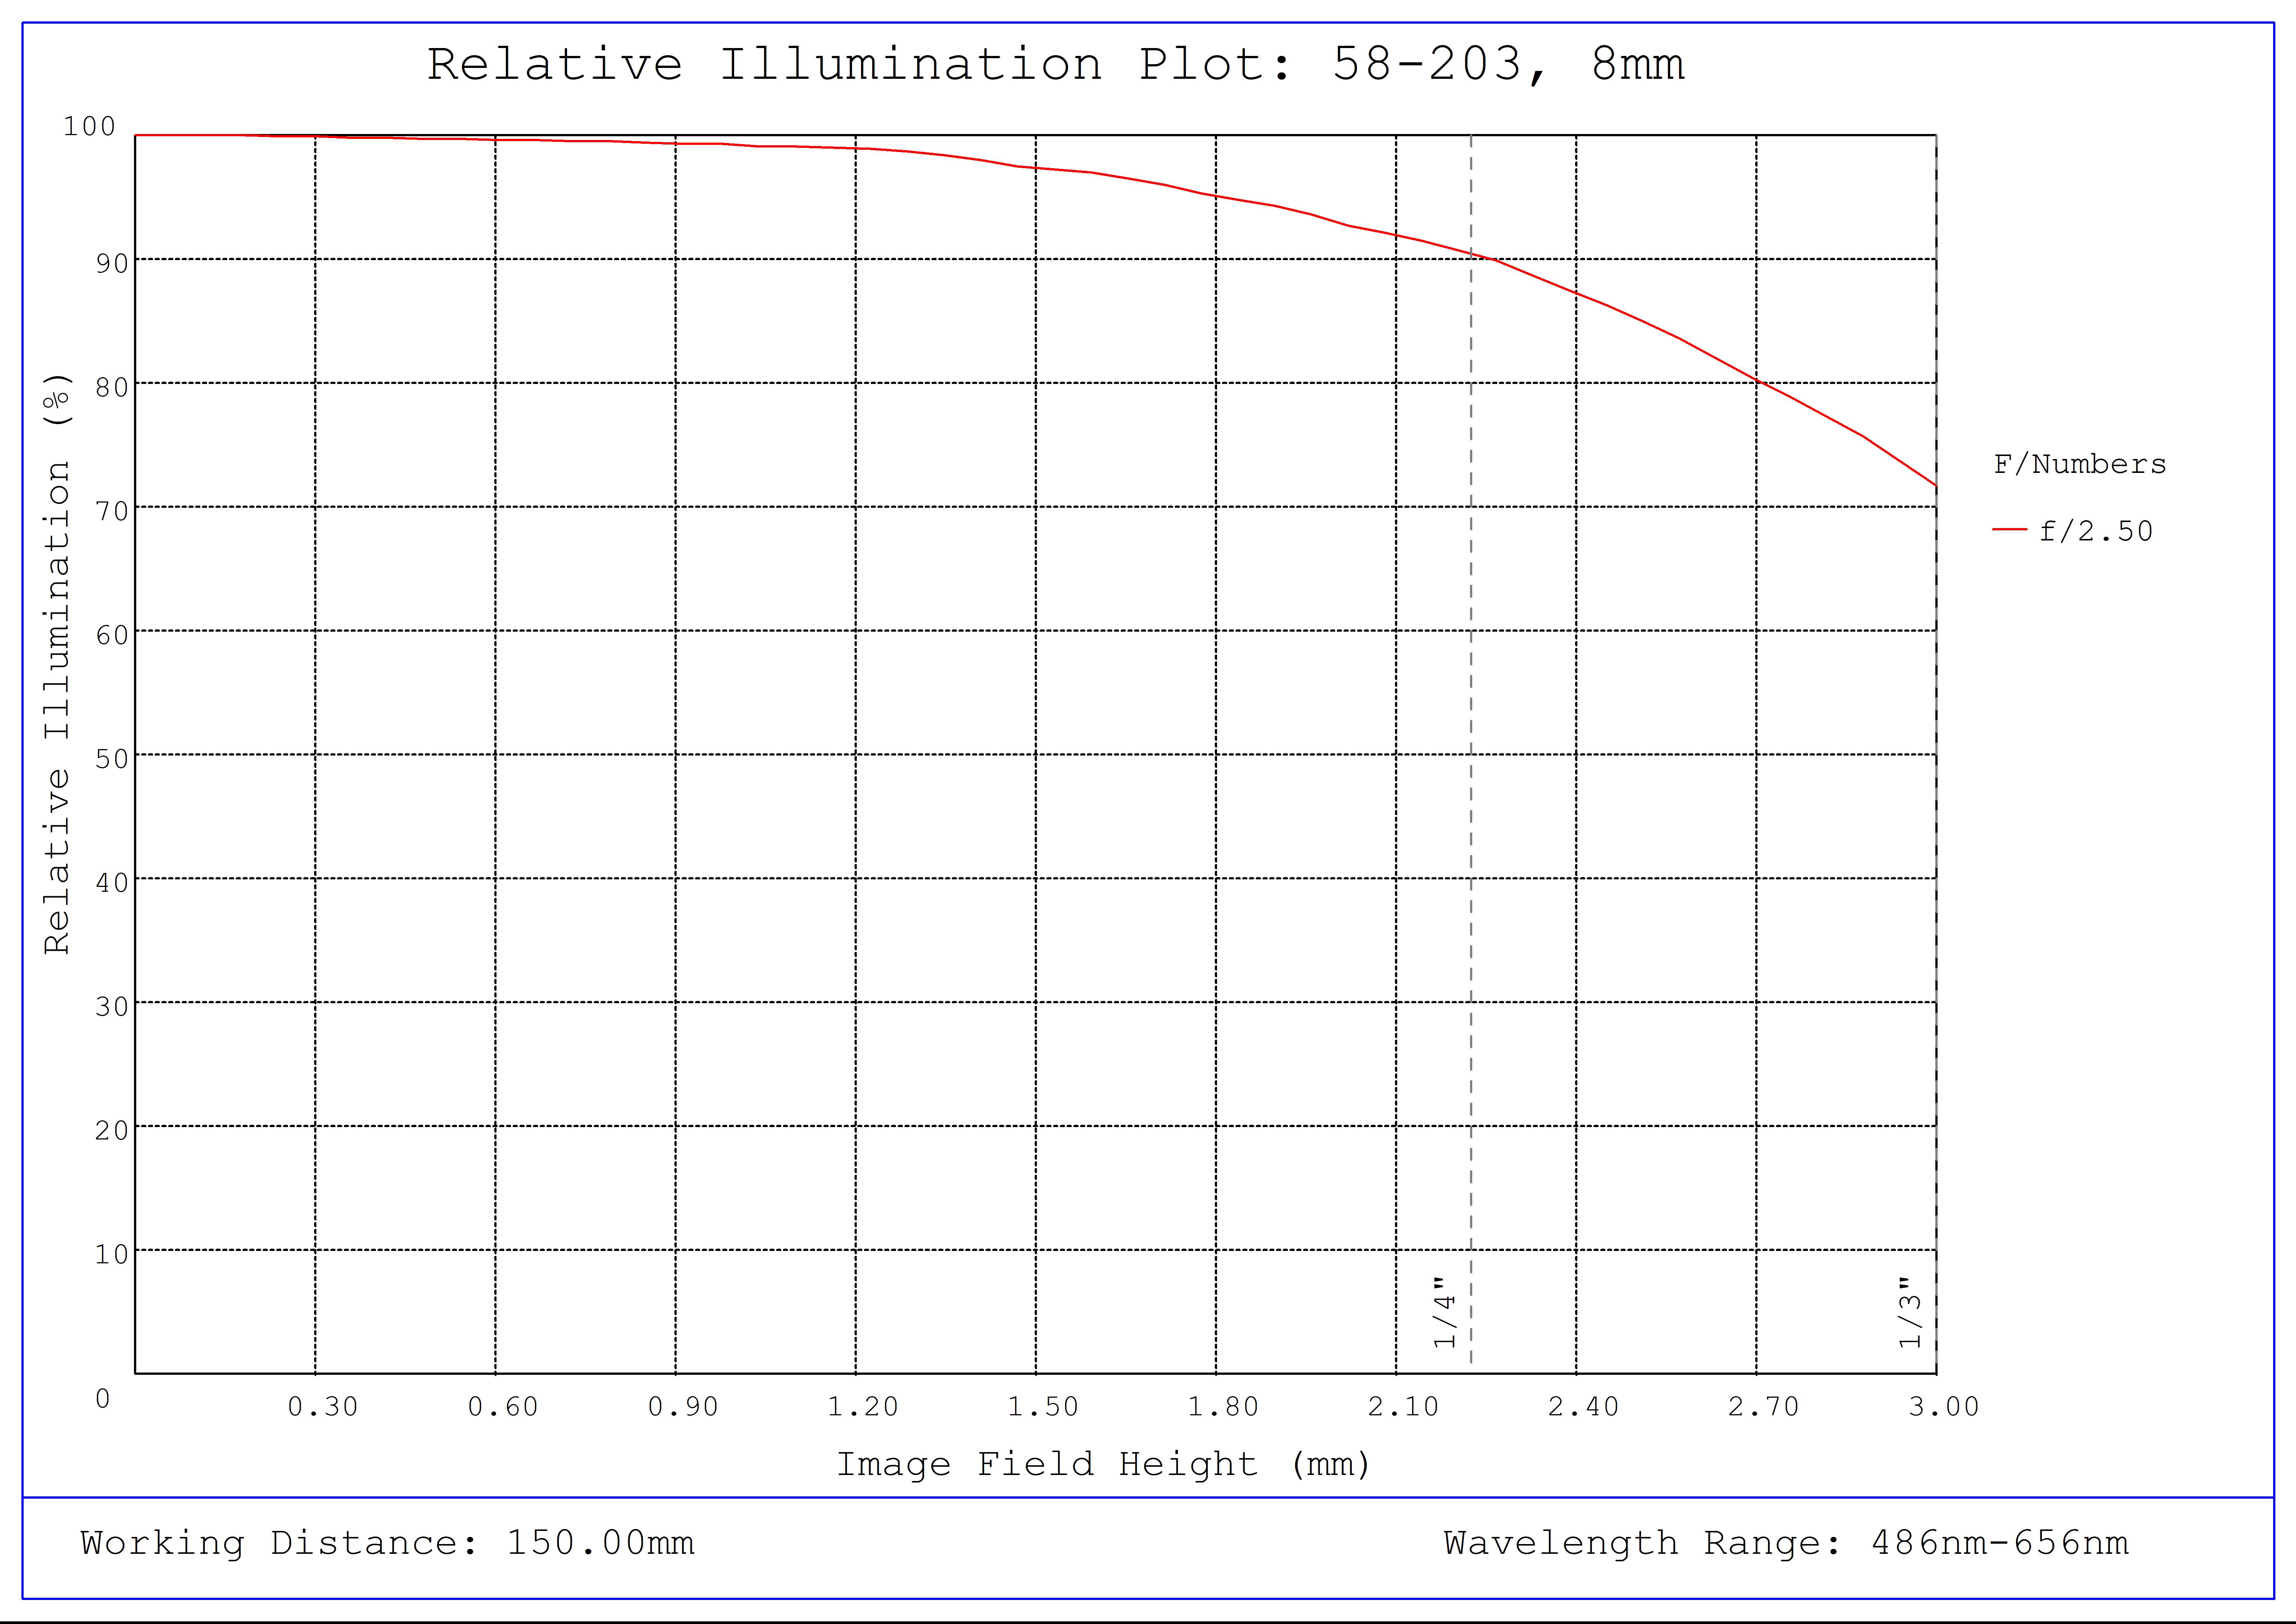 #58-203, 8mm FL f/2.5, Blue Series M12 Lens, Relative Illumination Plot